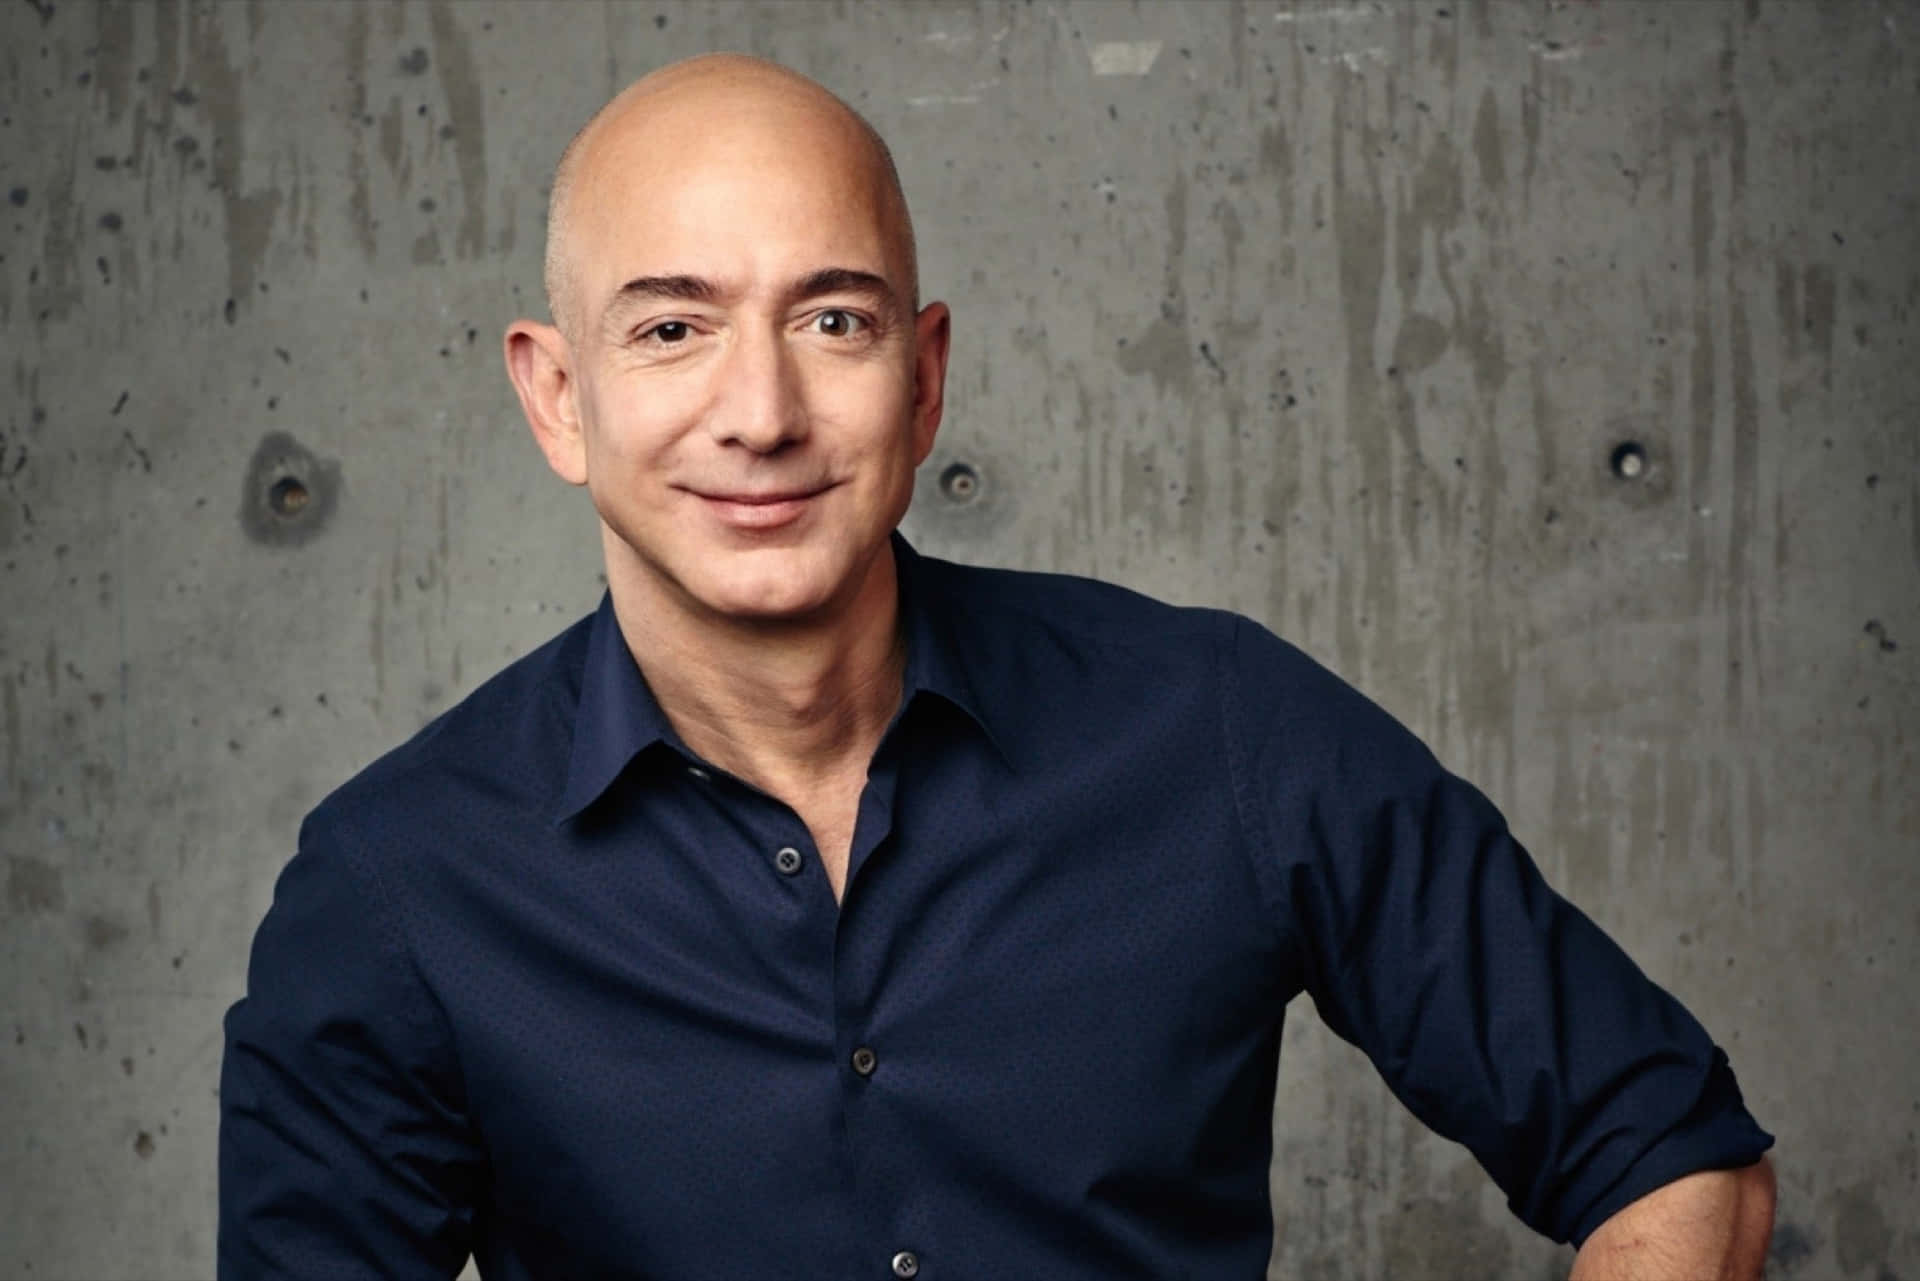 Portrait of Jeff Bezos, Founder of Amazon